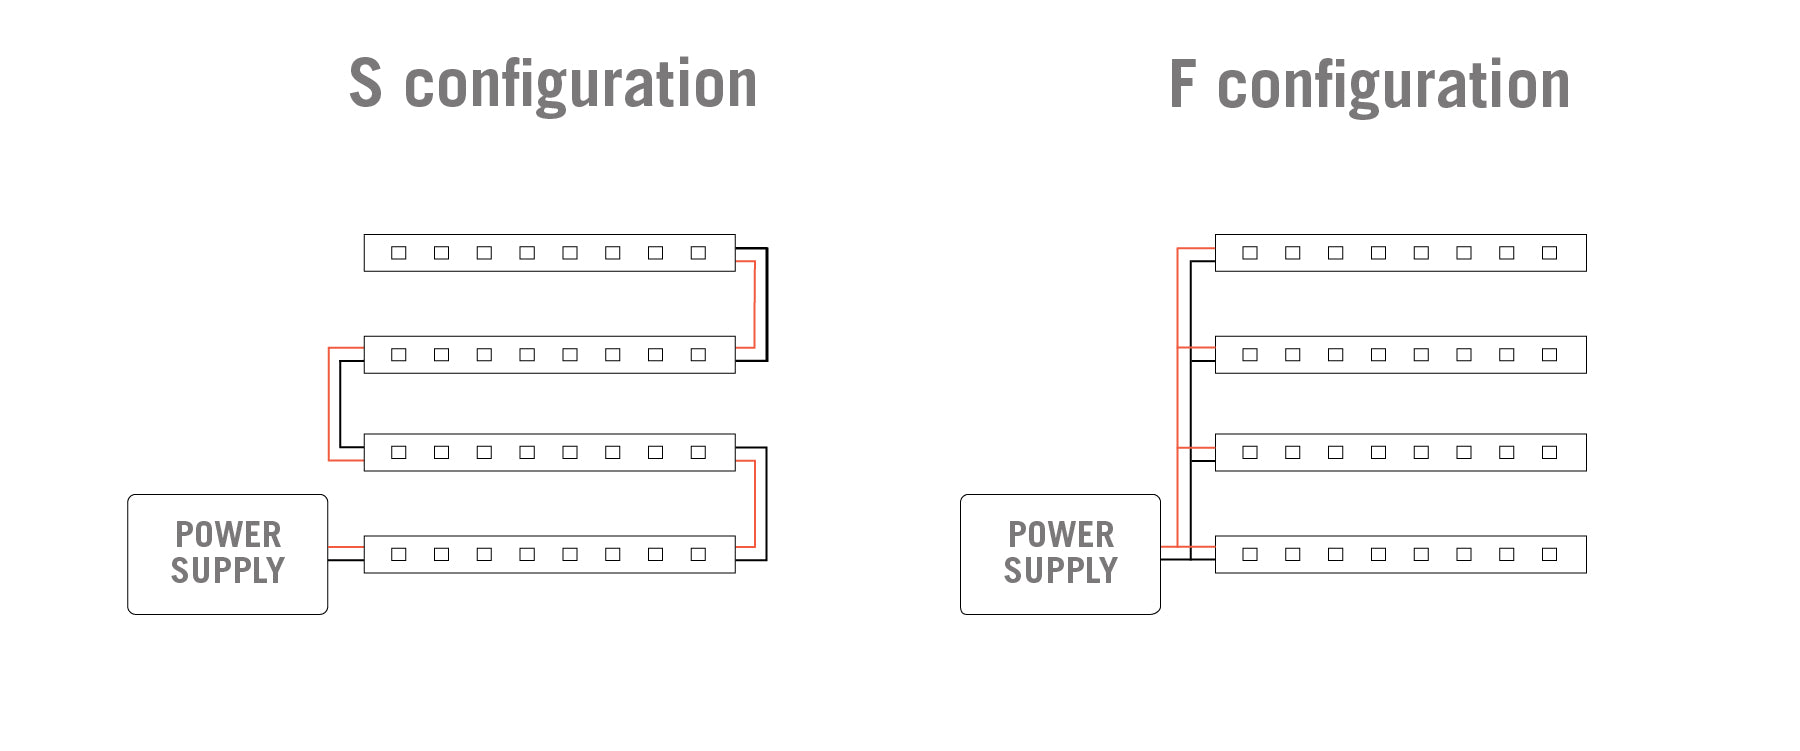 S configuration & F configuration illustrations